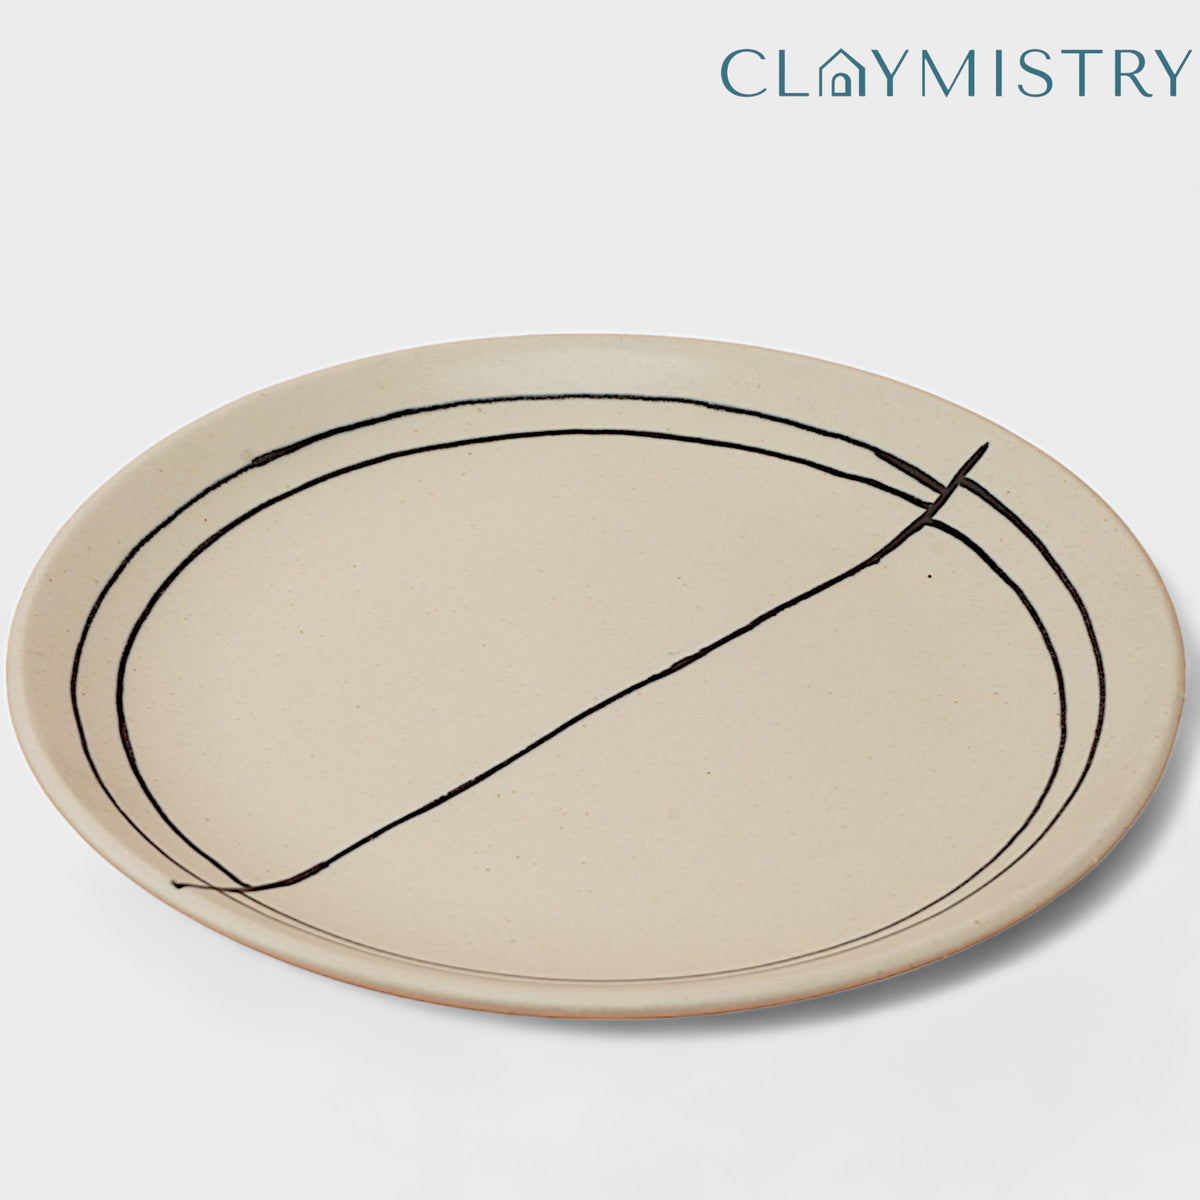 Claymistry Ceramic Off White with Black Geometric Design Dinner Plate, Matte Finish | Dishwasher, Oven & Microwave Safe | Dinnerware Serving Plate Thali | Premium Crockery